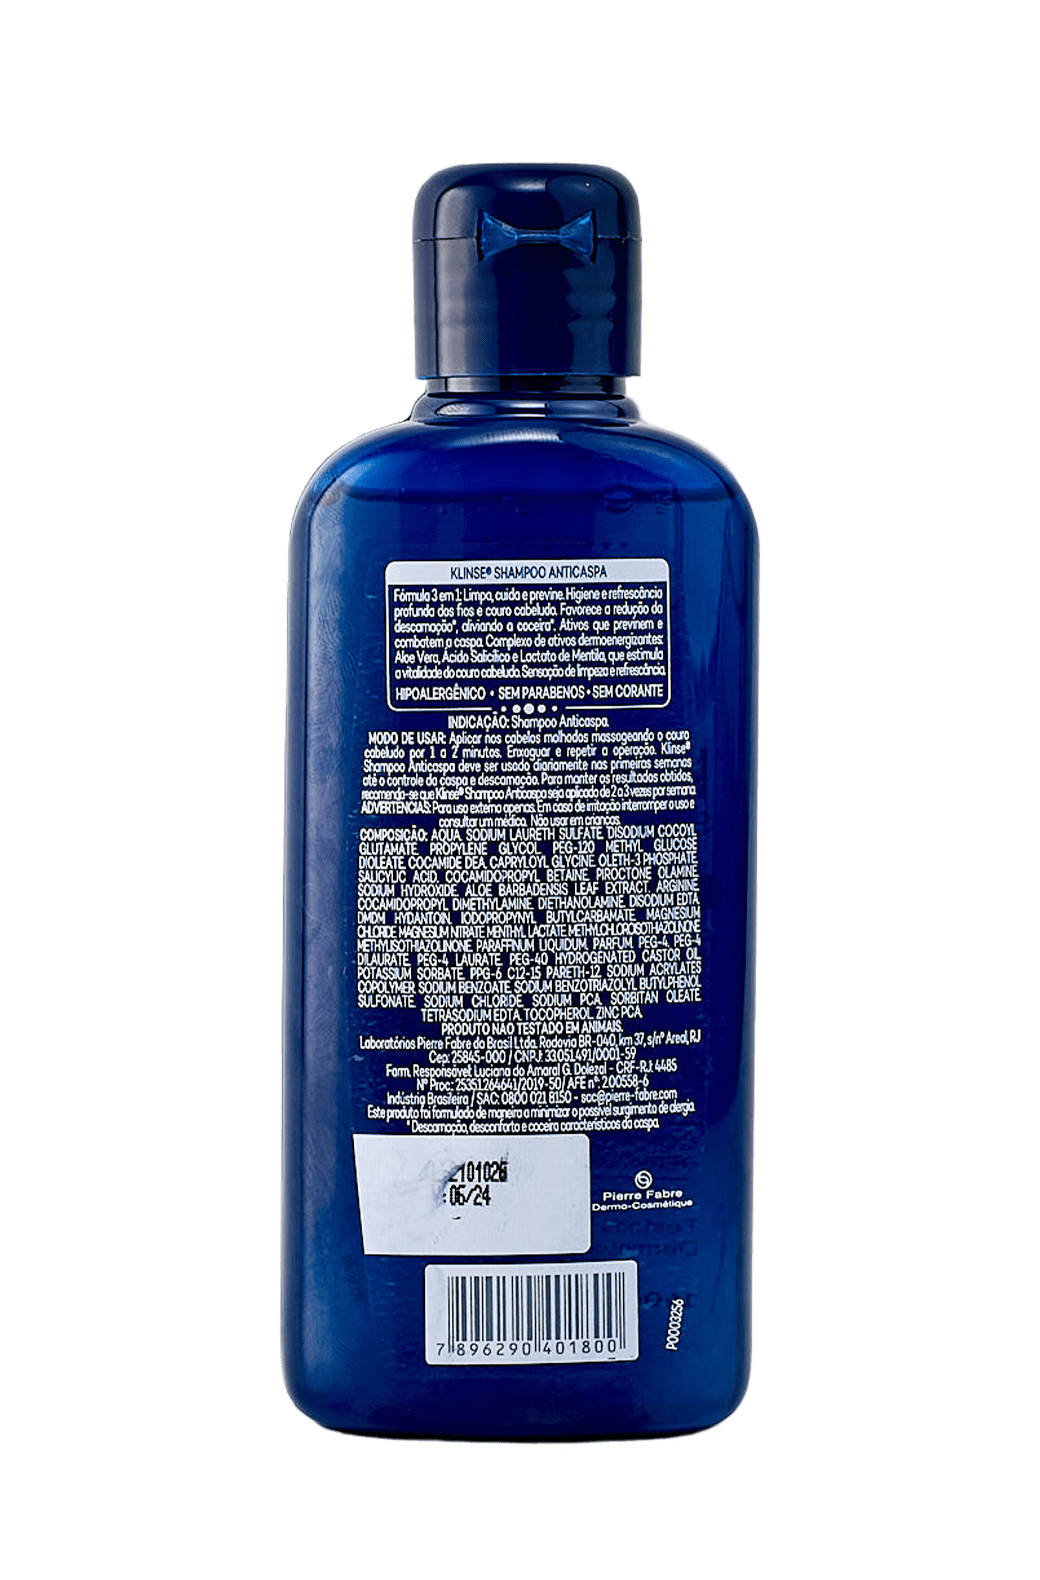 Klinse-Shampoo-140ml